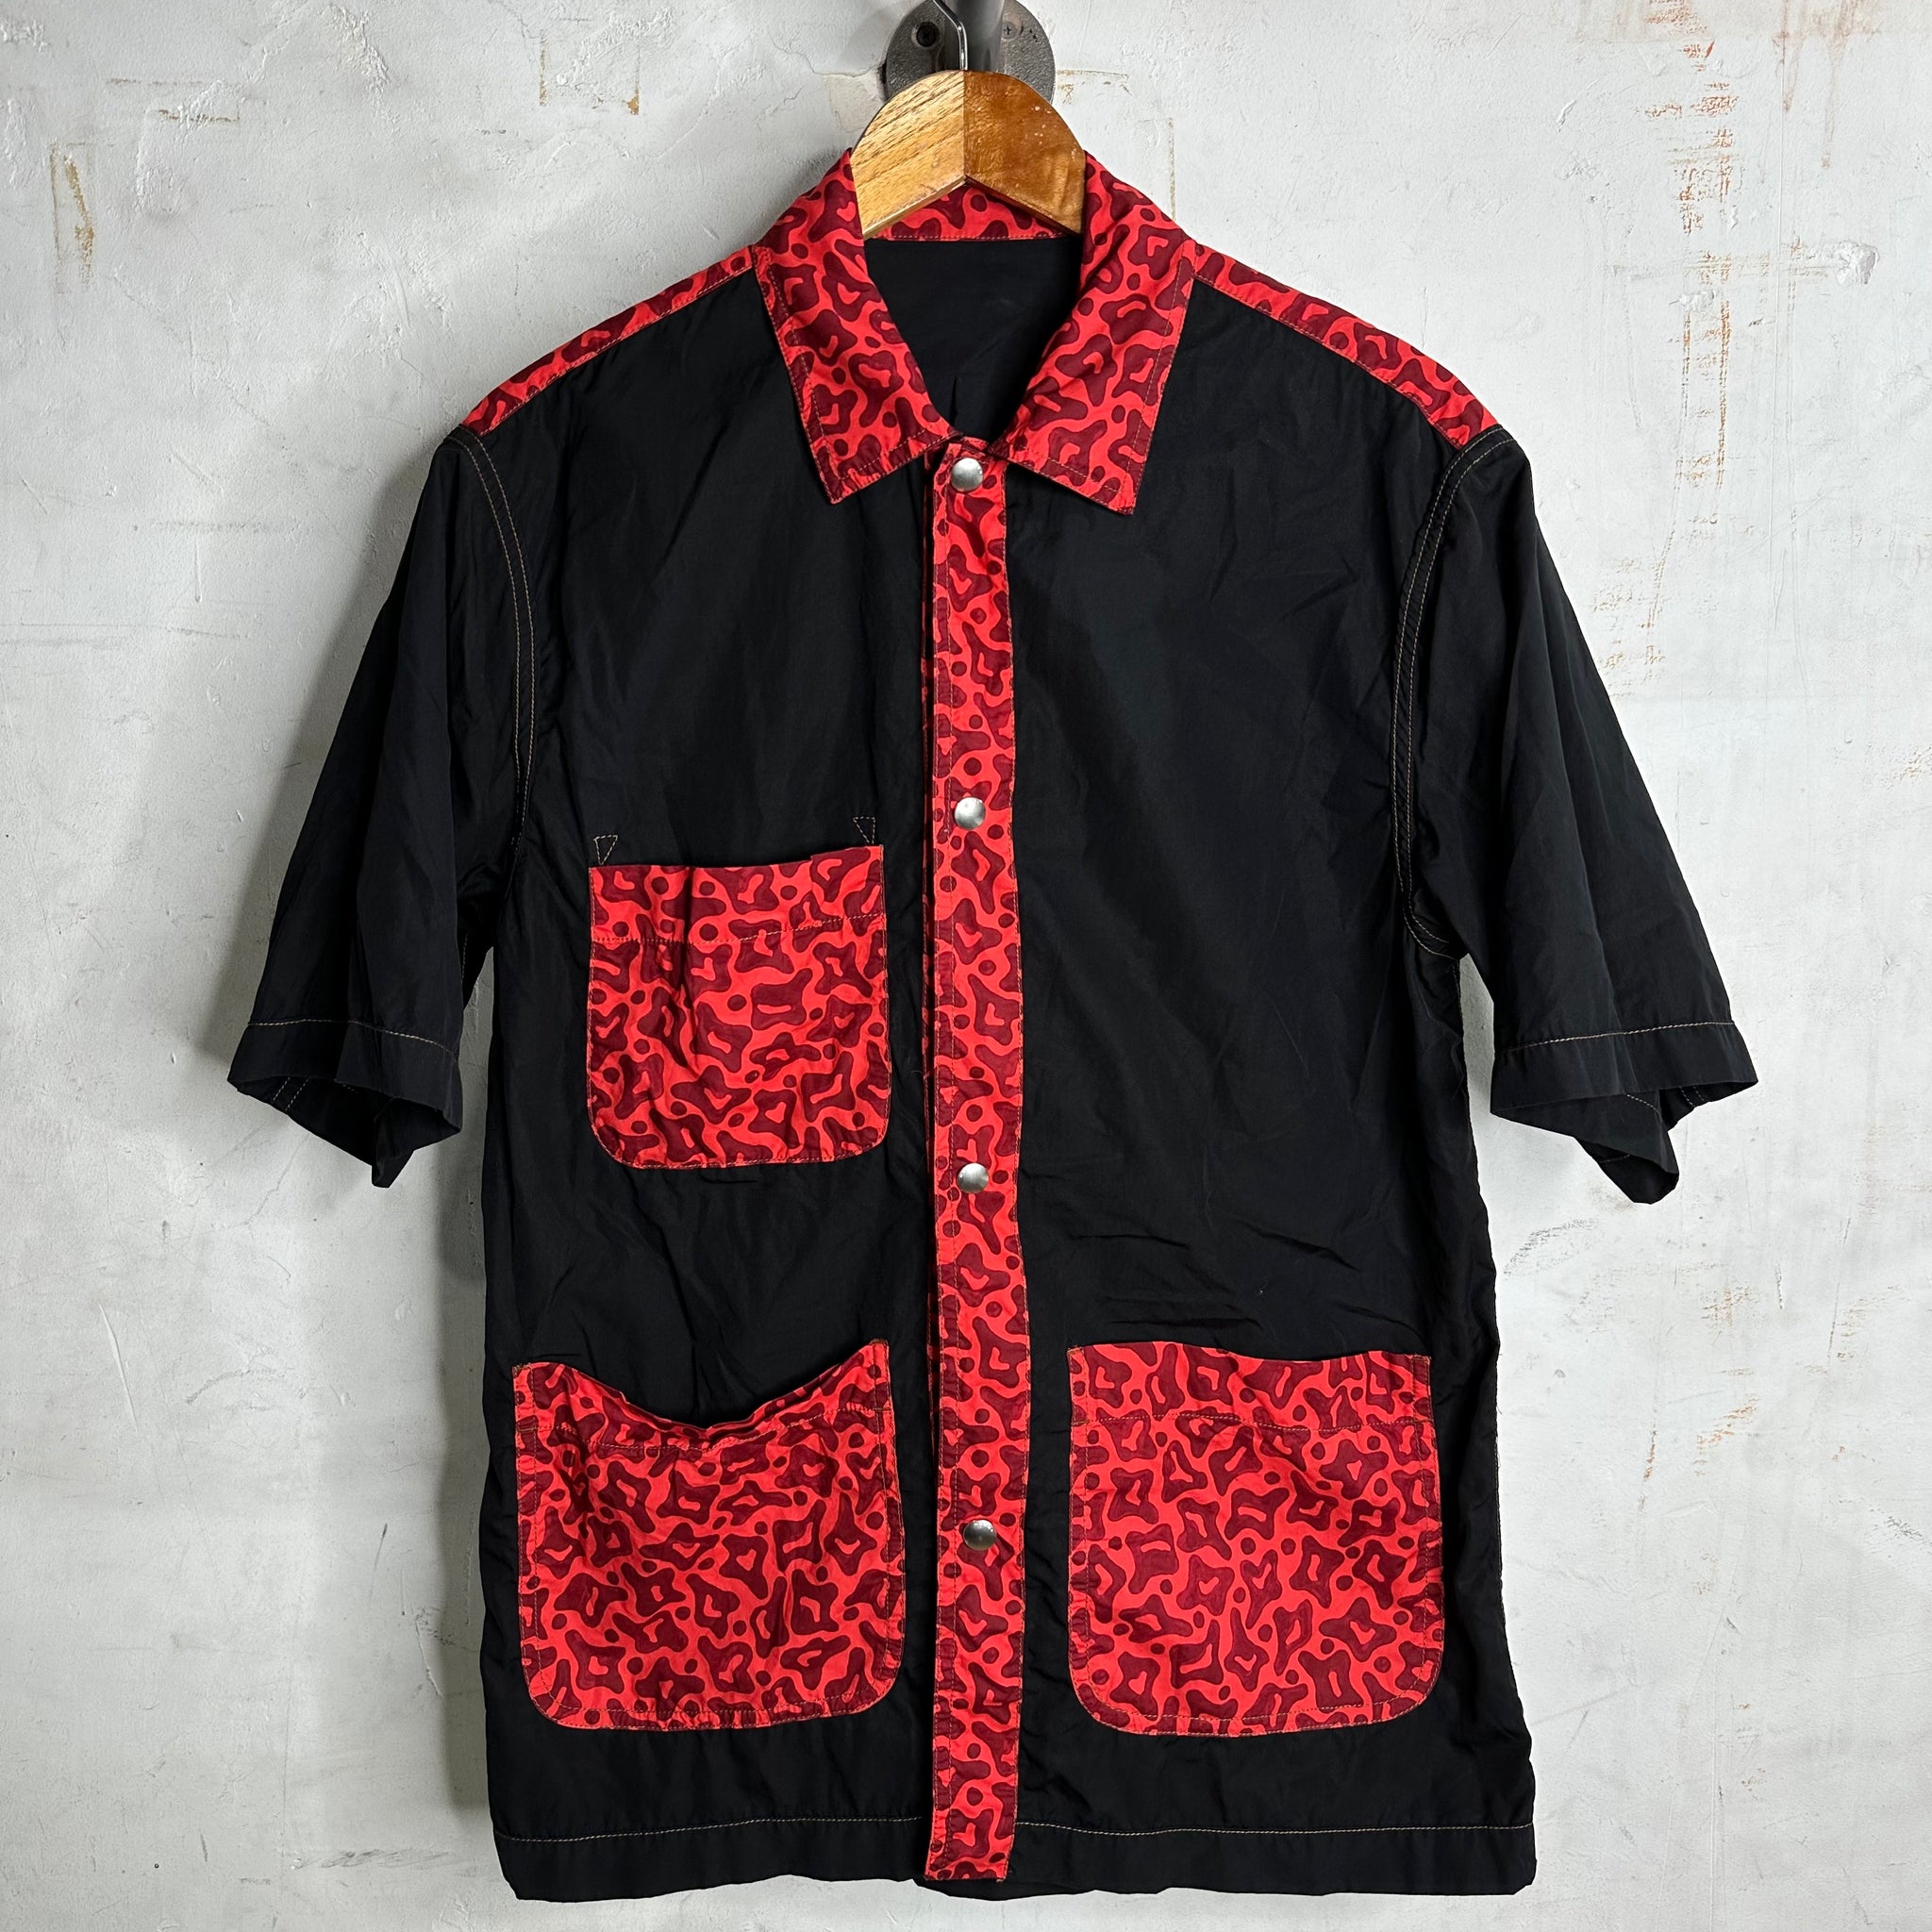 Marni Reversible Cheetah Print Shirt